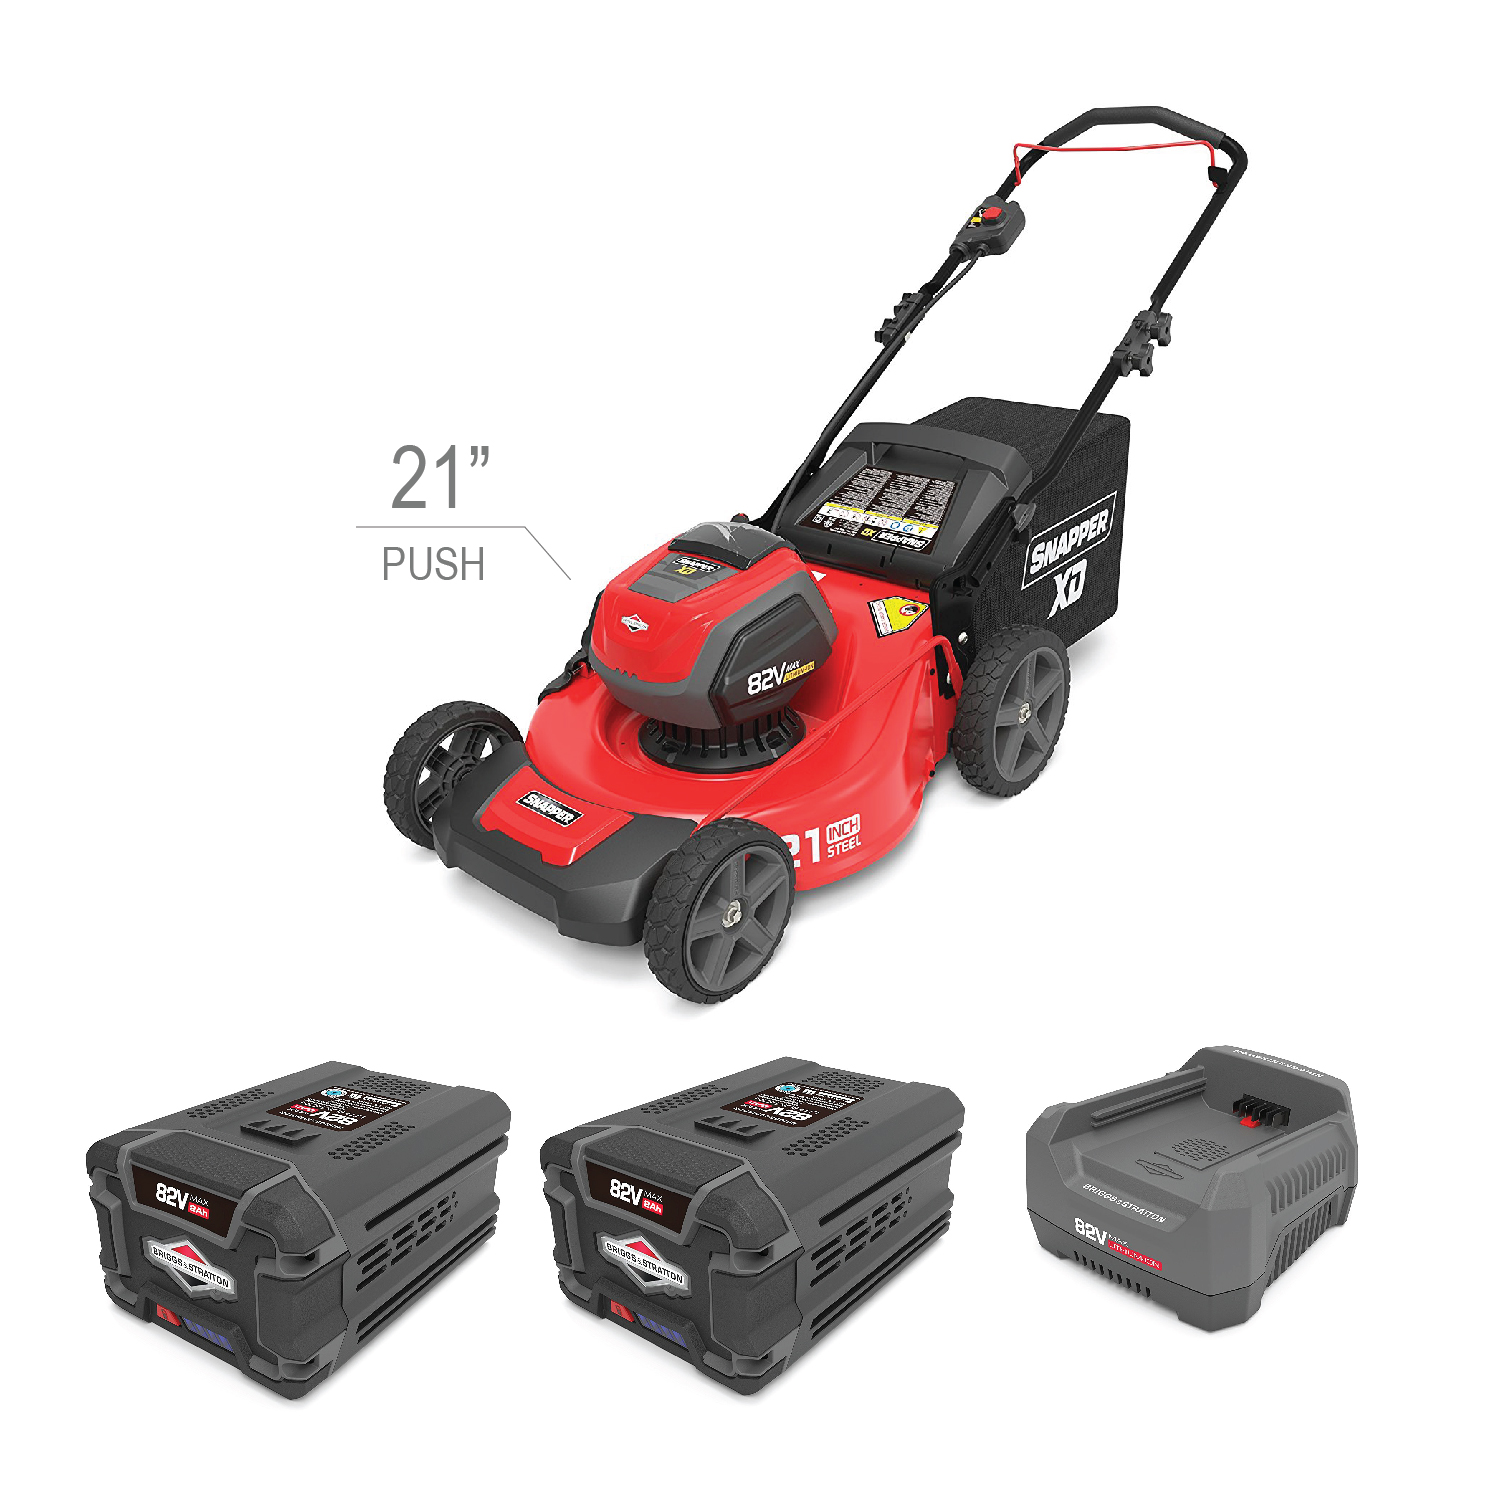 Kit Walk (push) Mower 21" 82V two 2AH Batteries & Charger